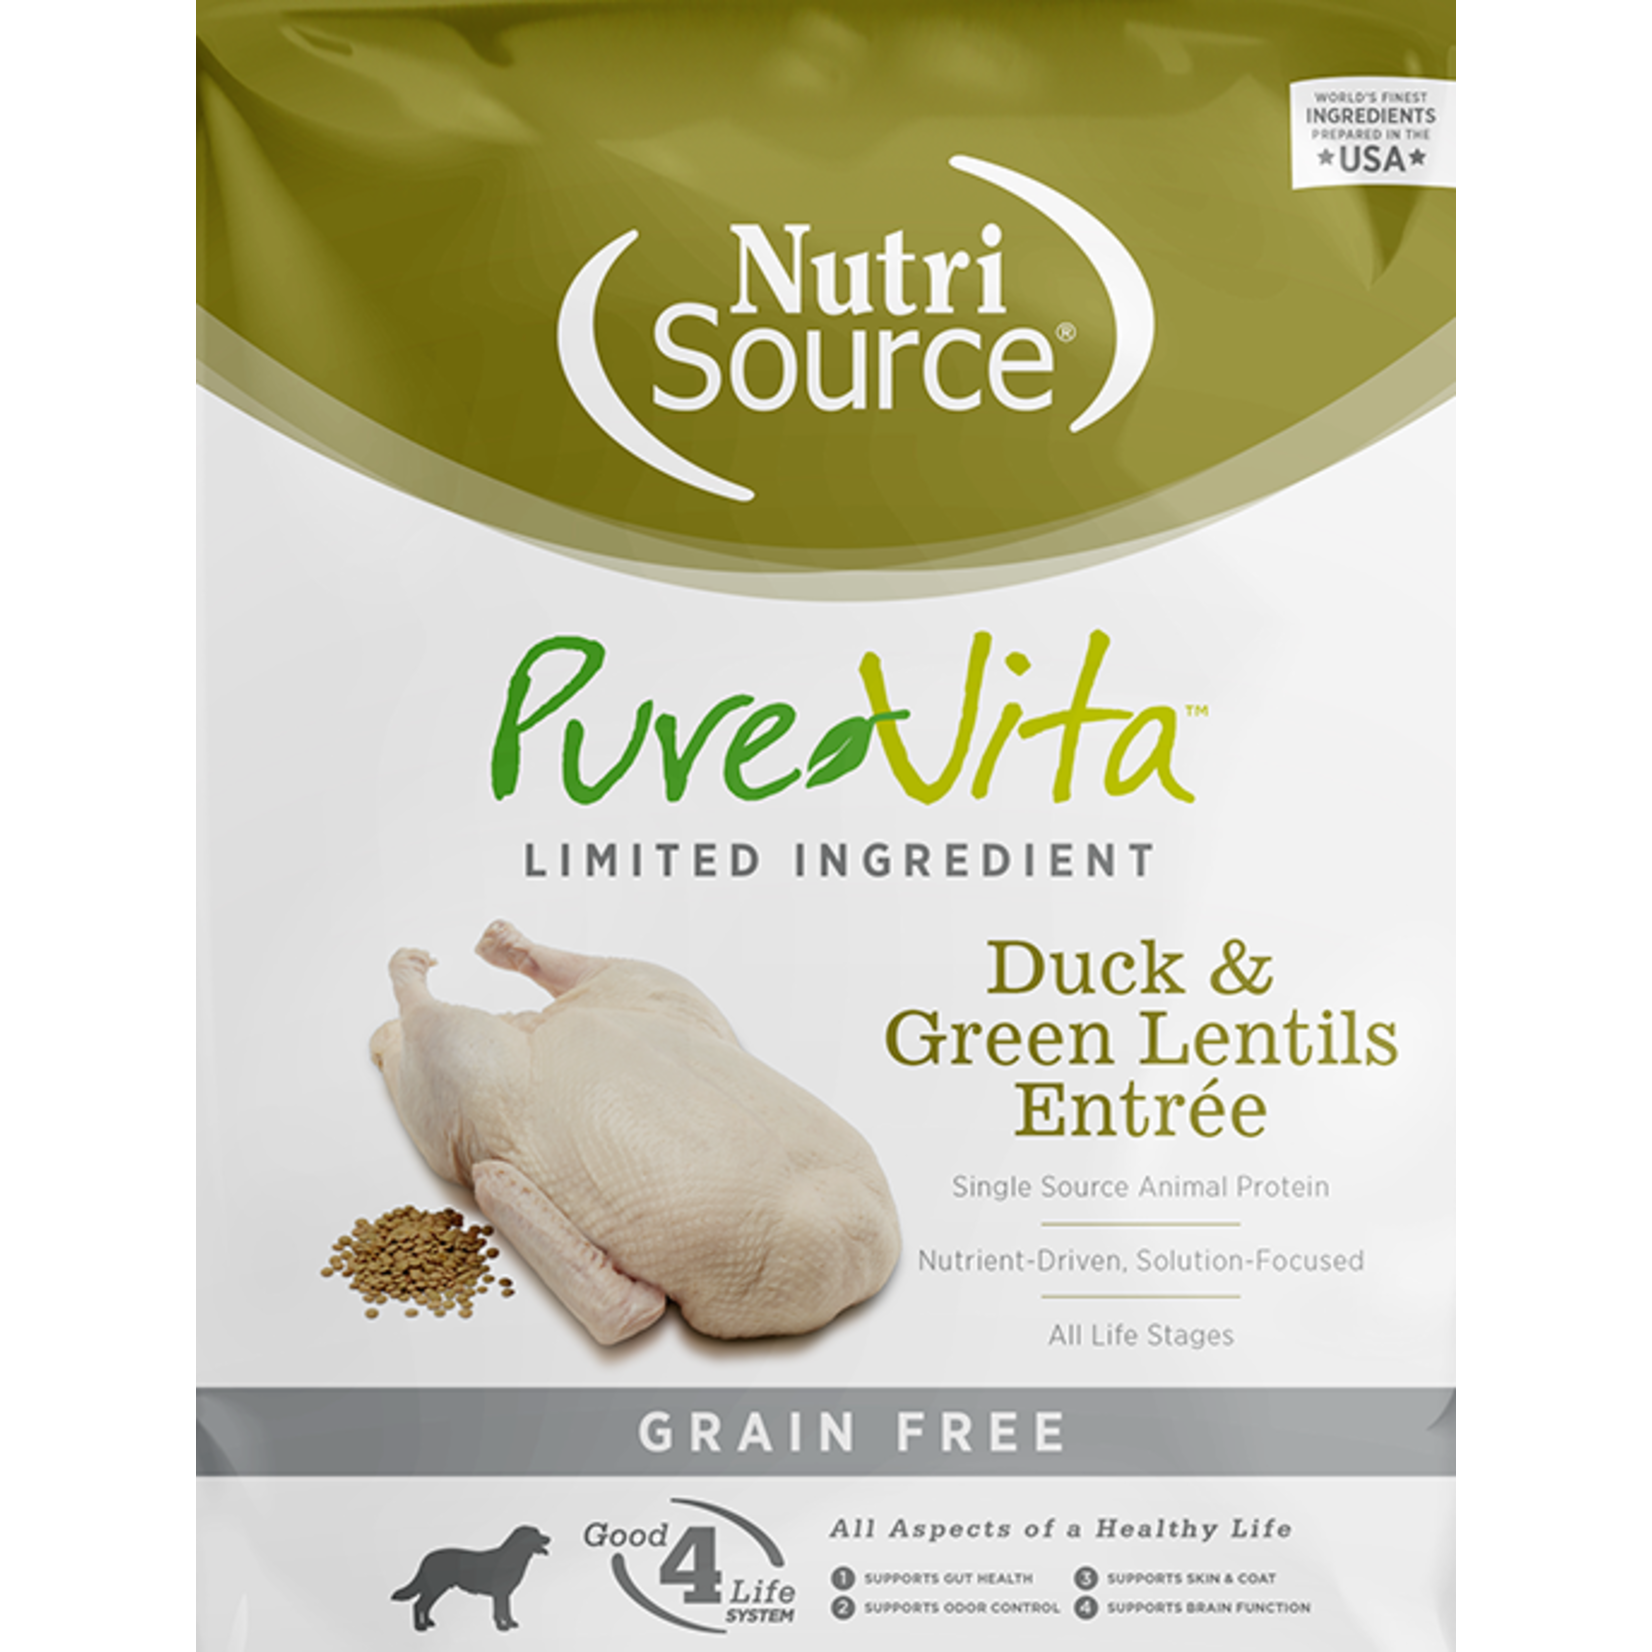 NUTRI SOURCE NUTRISOURCE. PureVita. Duck & Green Lentils Grain Free PureVita 5LB